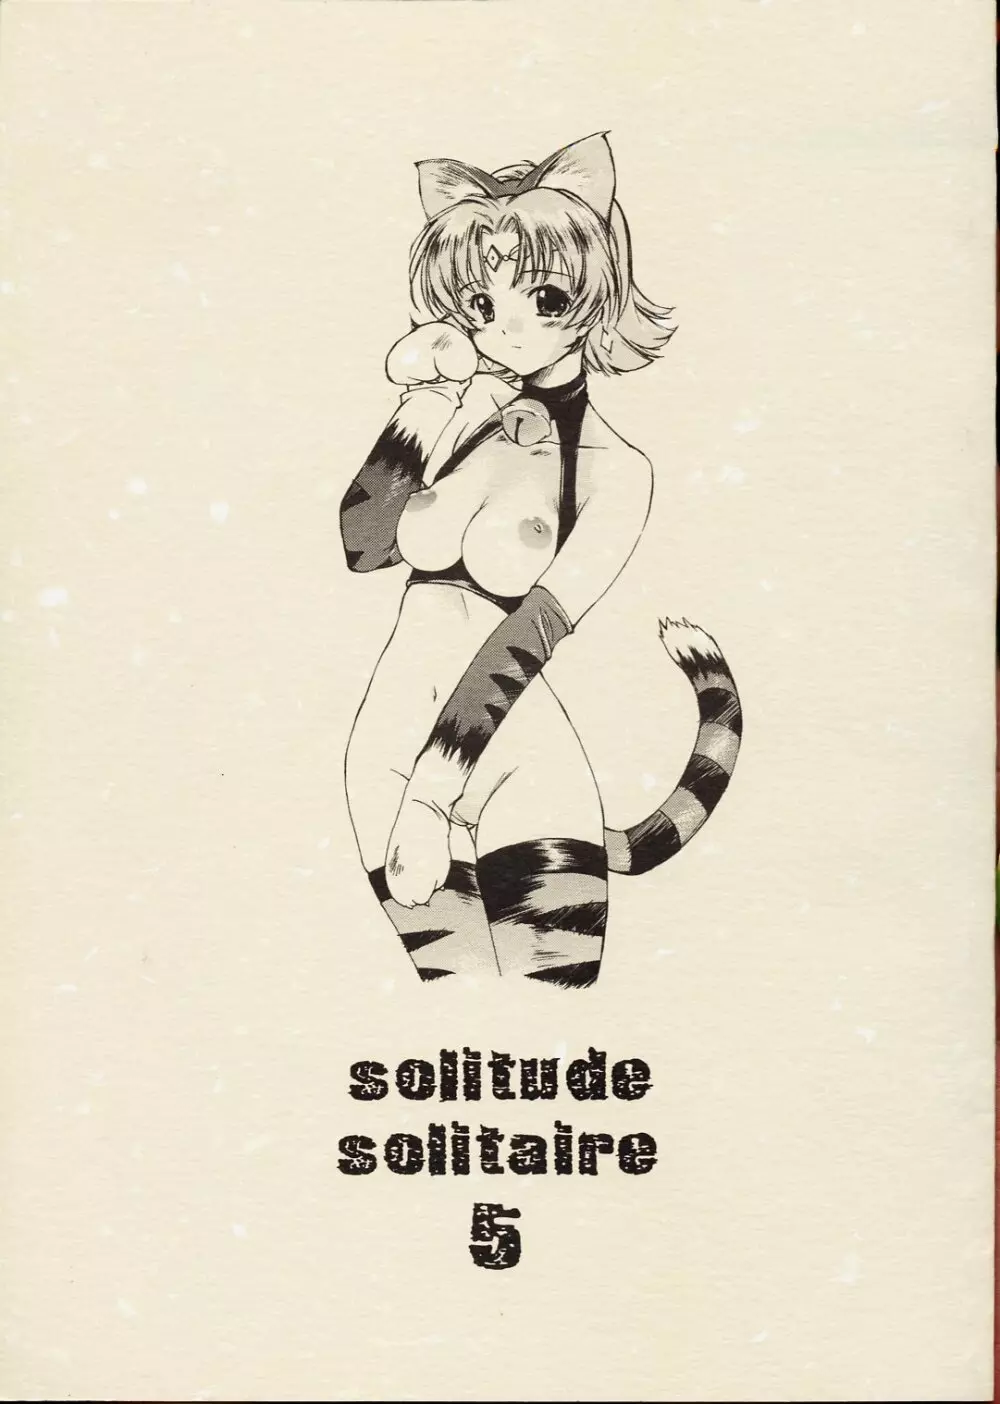 Solitude Solitaire 5